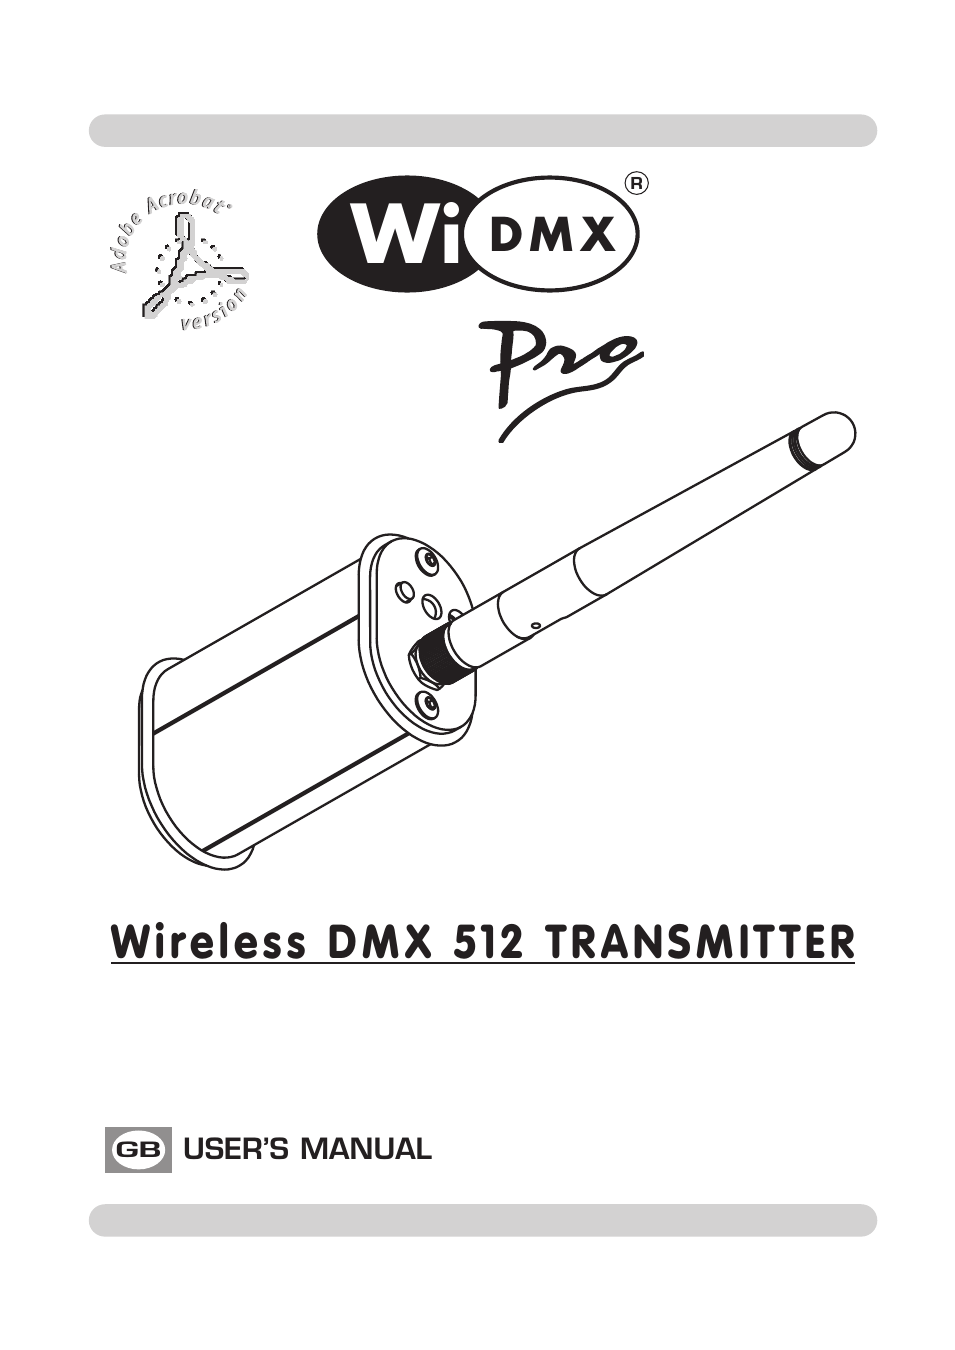 WiDMX Pro Transmitter